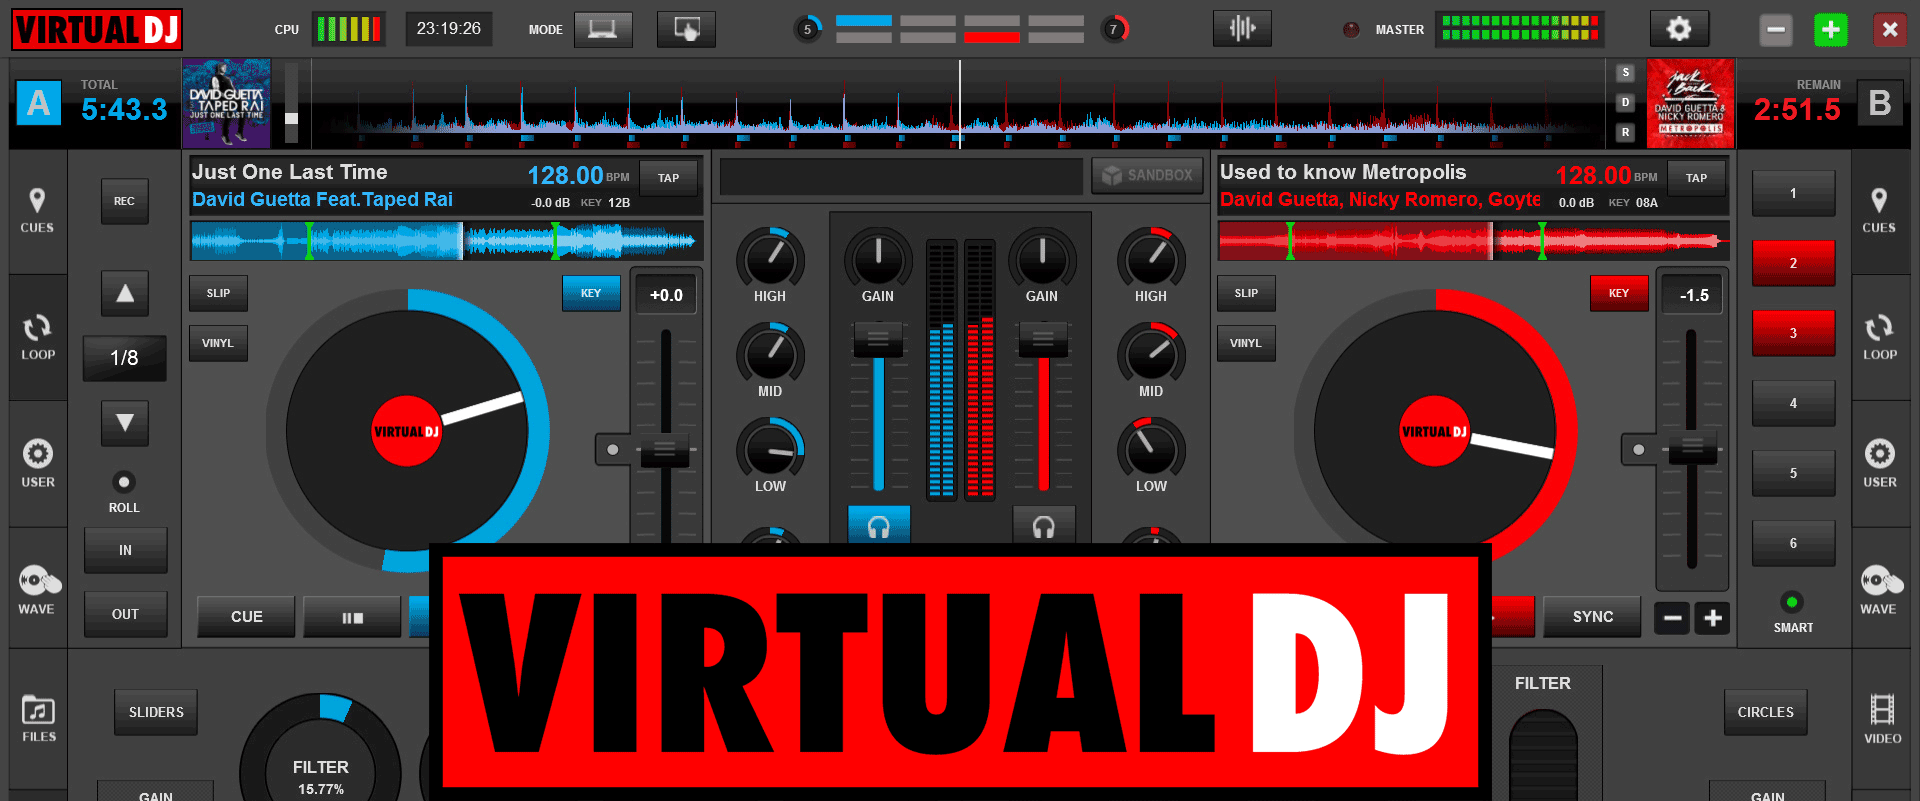 Virtual Dj Turntables Free Download